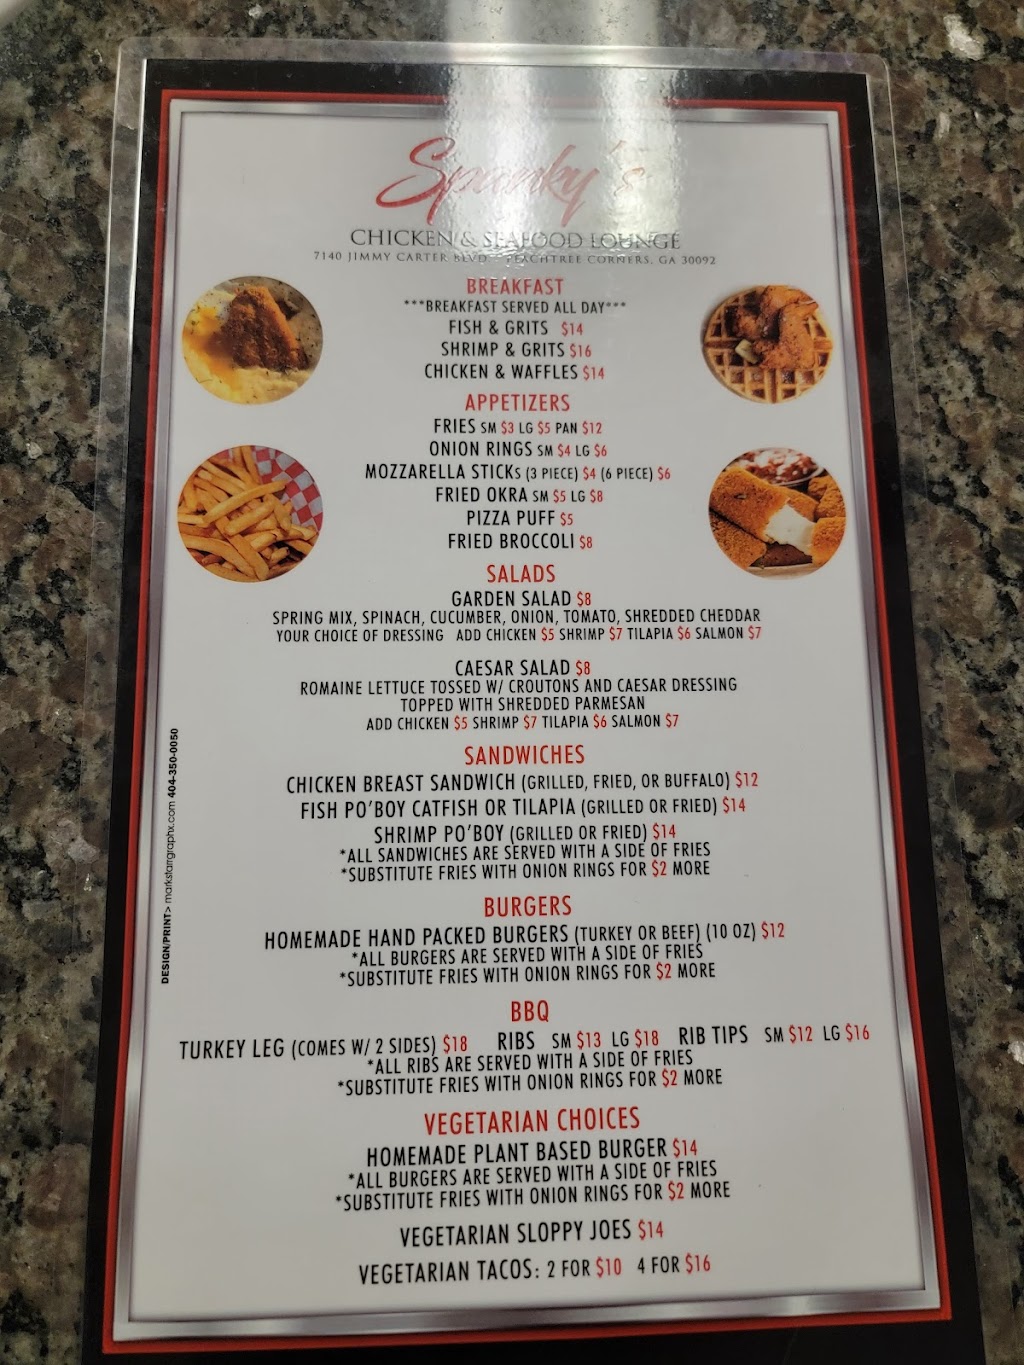 Spankys Chicken & Seafood Lounge 2 | restaurant | 7140 Jimmy Carter Blvd, Peachtree Corners, GA 30092, USA